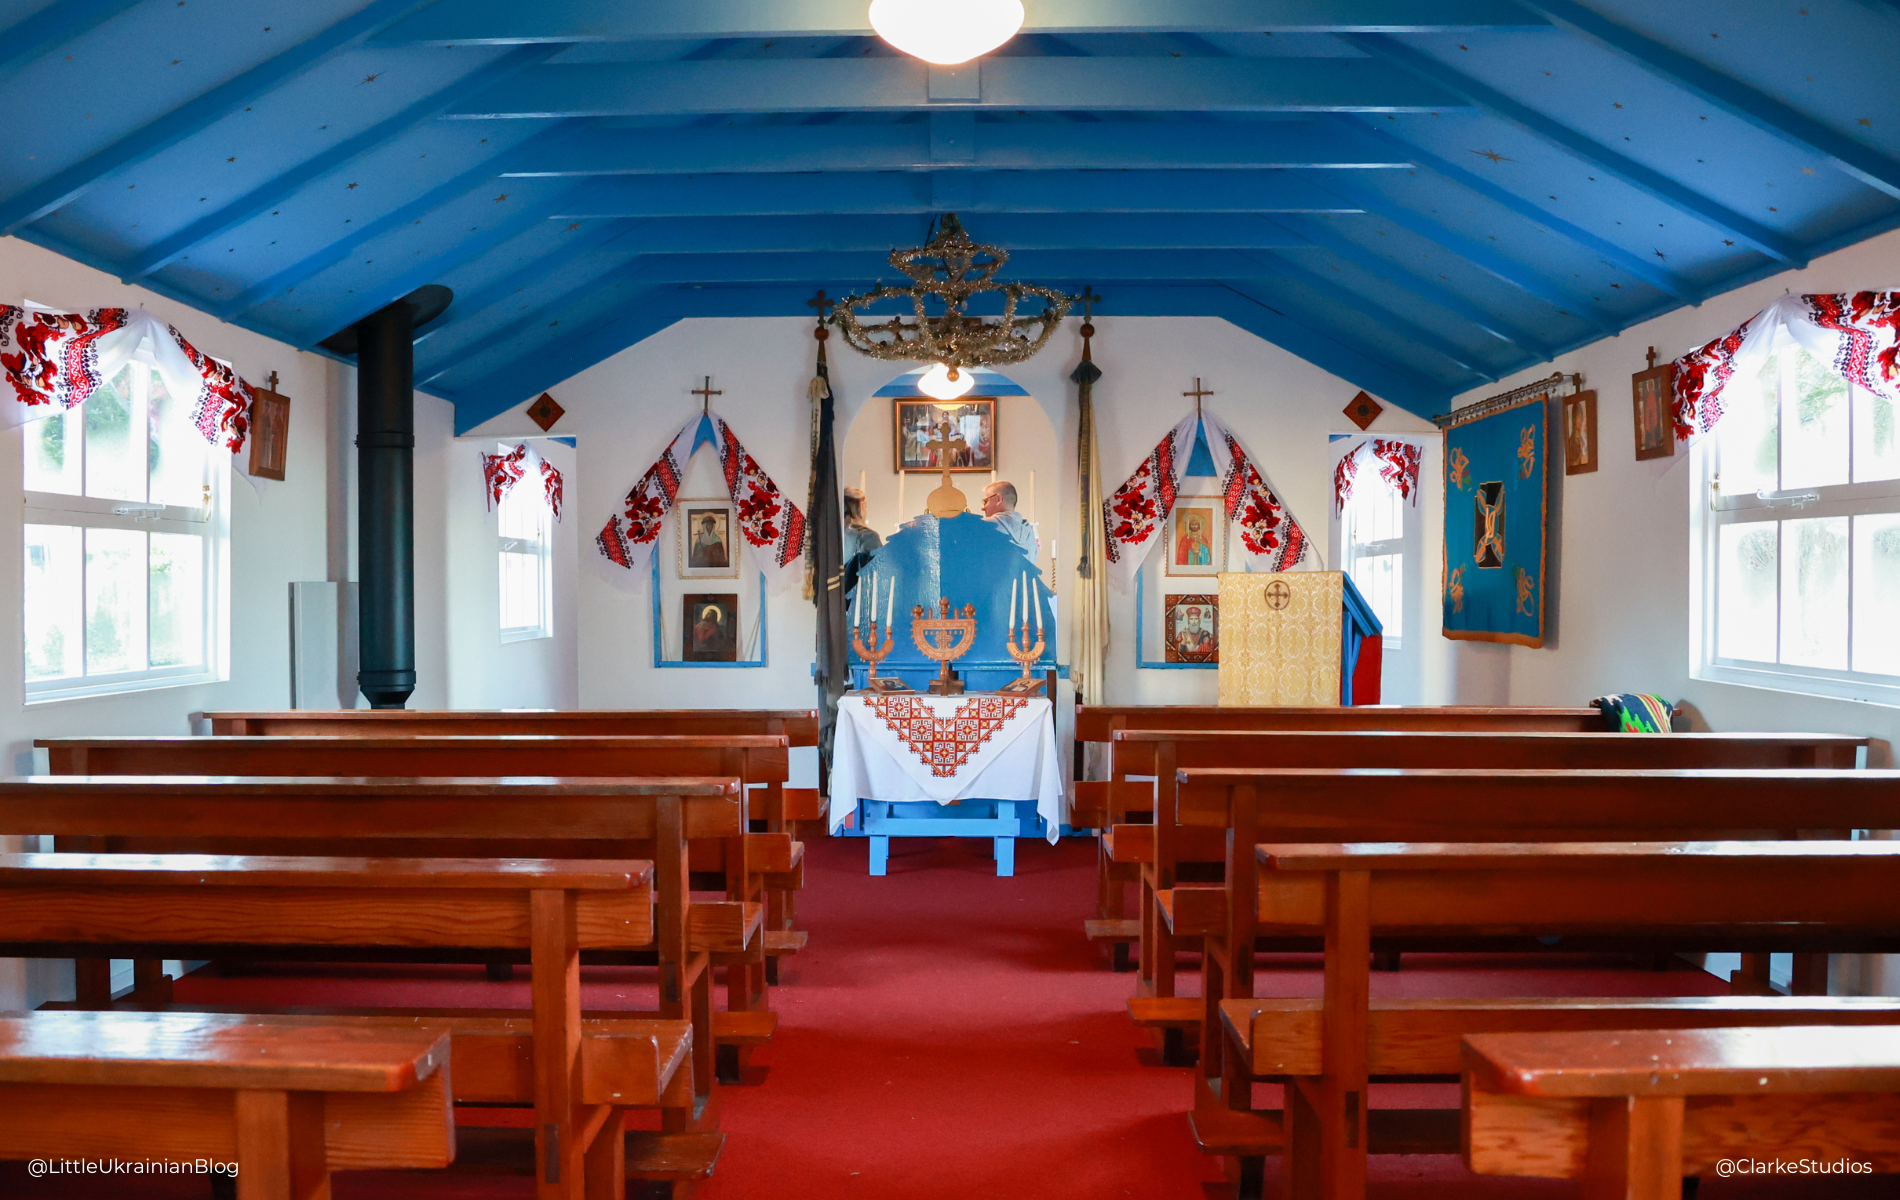 Ukrainian POW Chapel, Little Ukrainian Blog, Ukrainian Chapel, Hallmuir Chapel, Rimini Camp, Lockerbie, Ukrainian Chapel Lockerbie